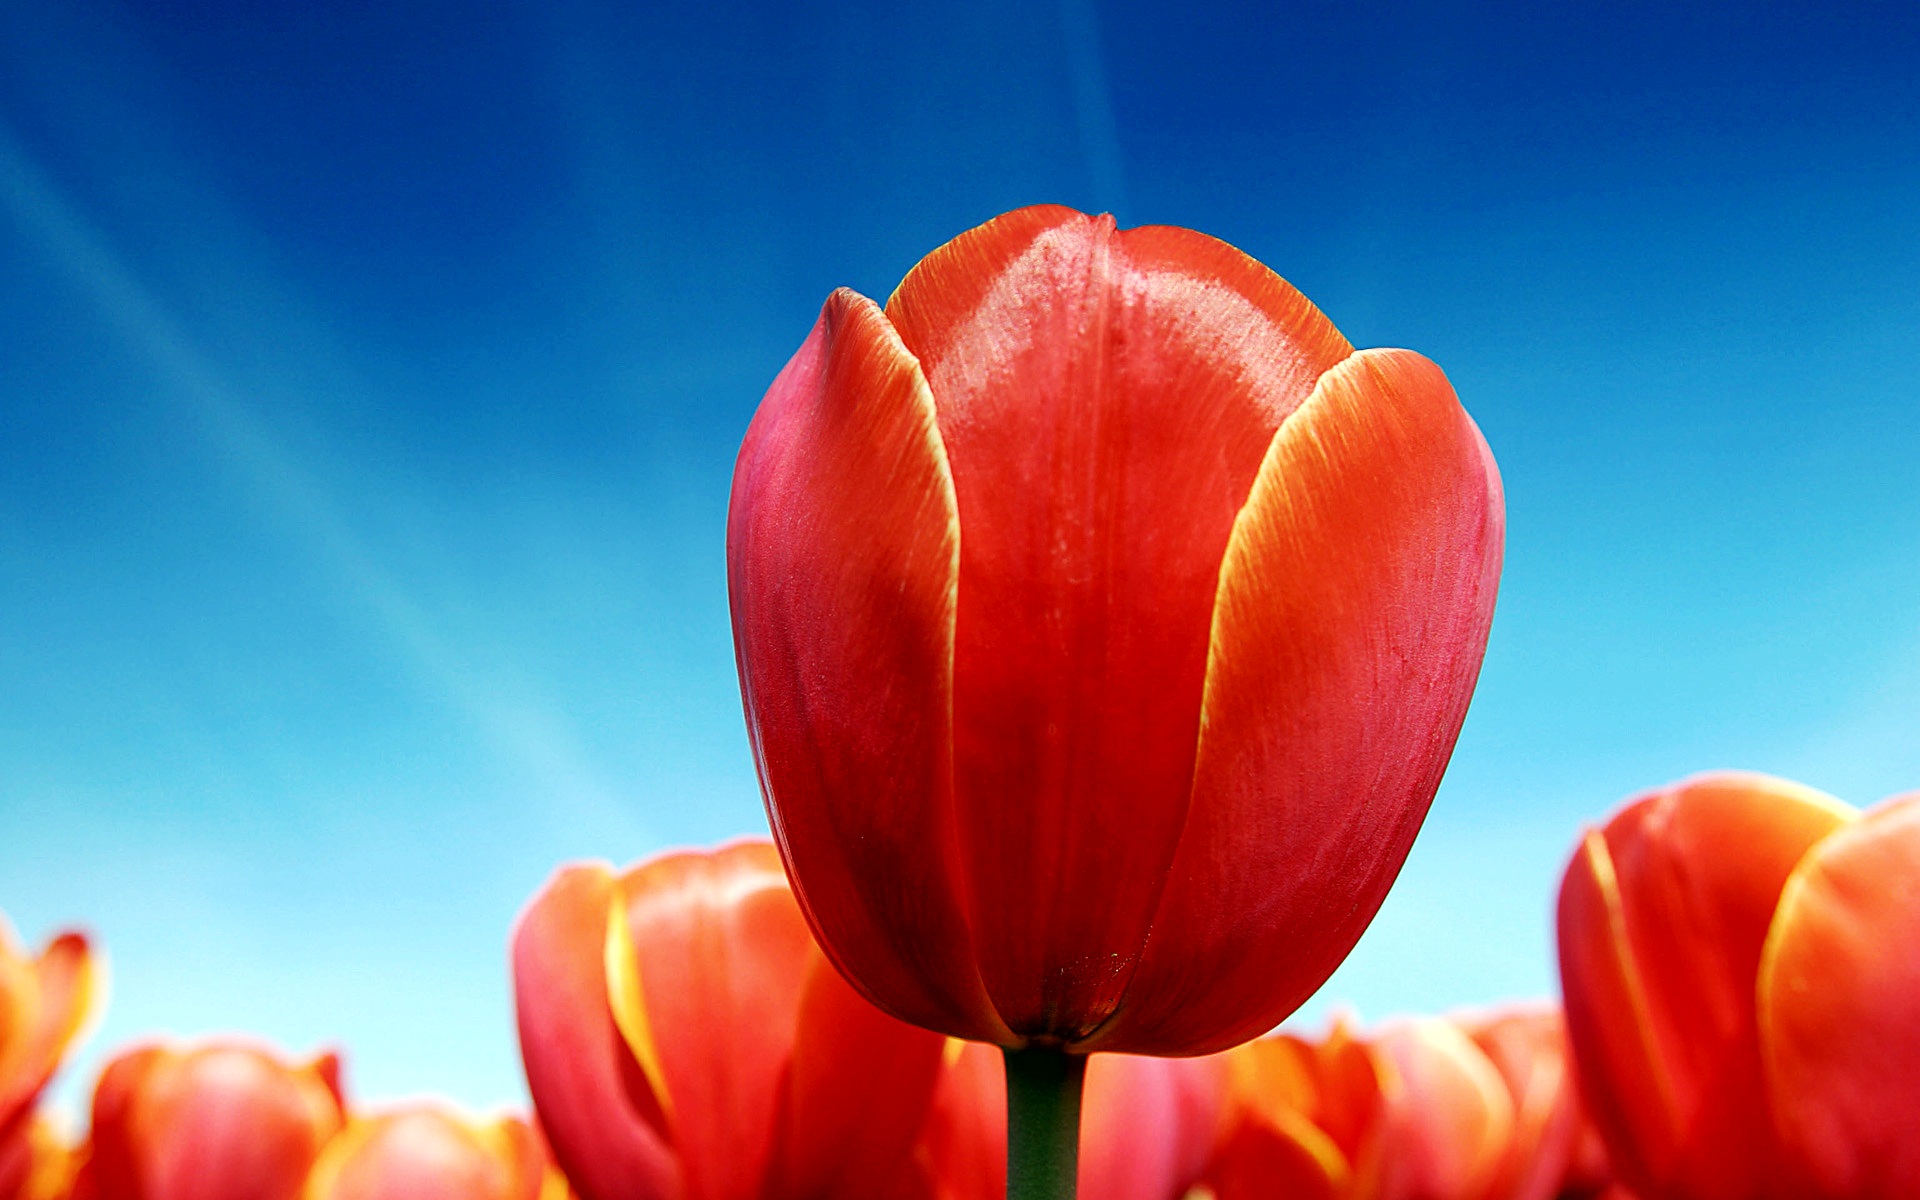 Tulips938408478 - Tulips - Tulips, Roses